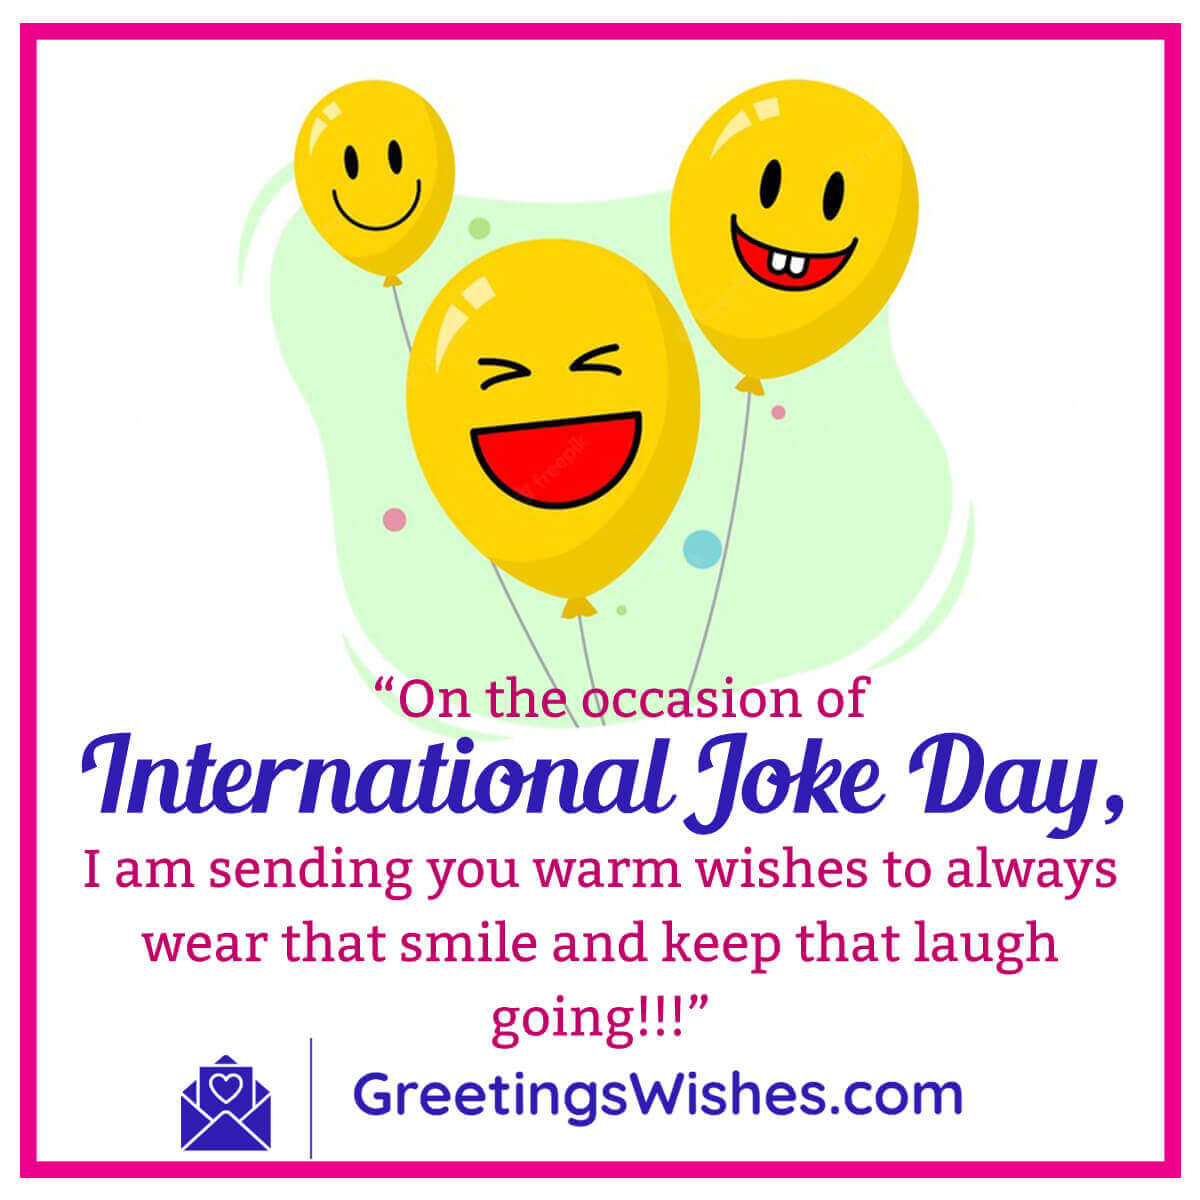 International Joke Day Images